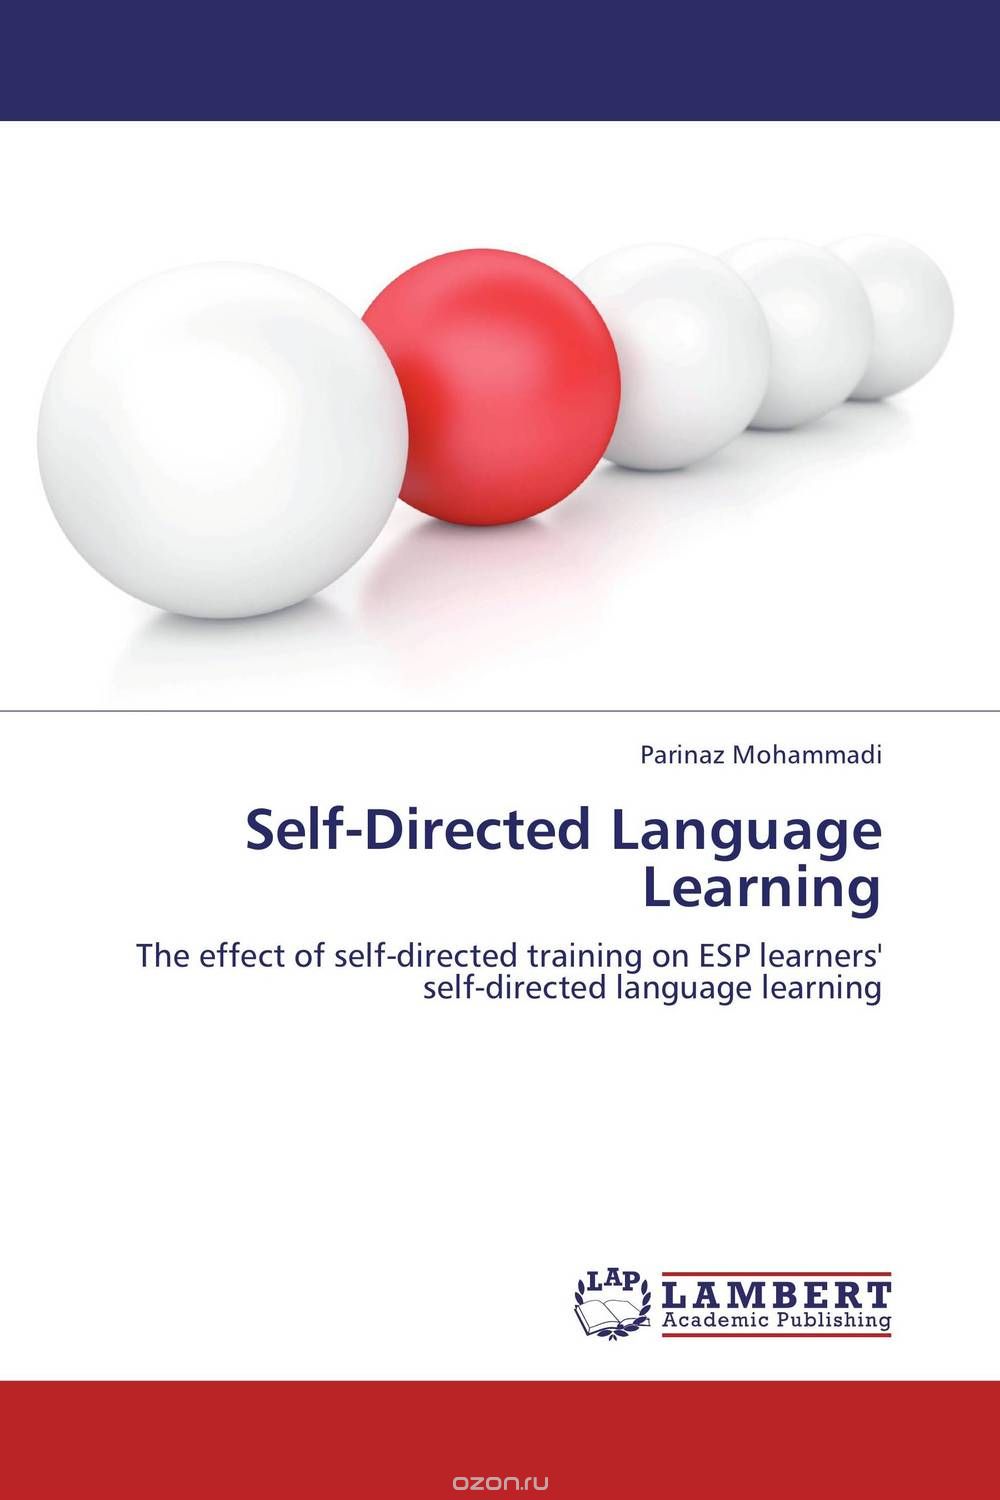 Скачать книгу "Self-Directed Language Learning"